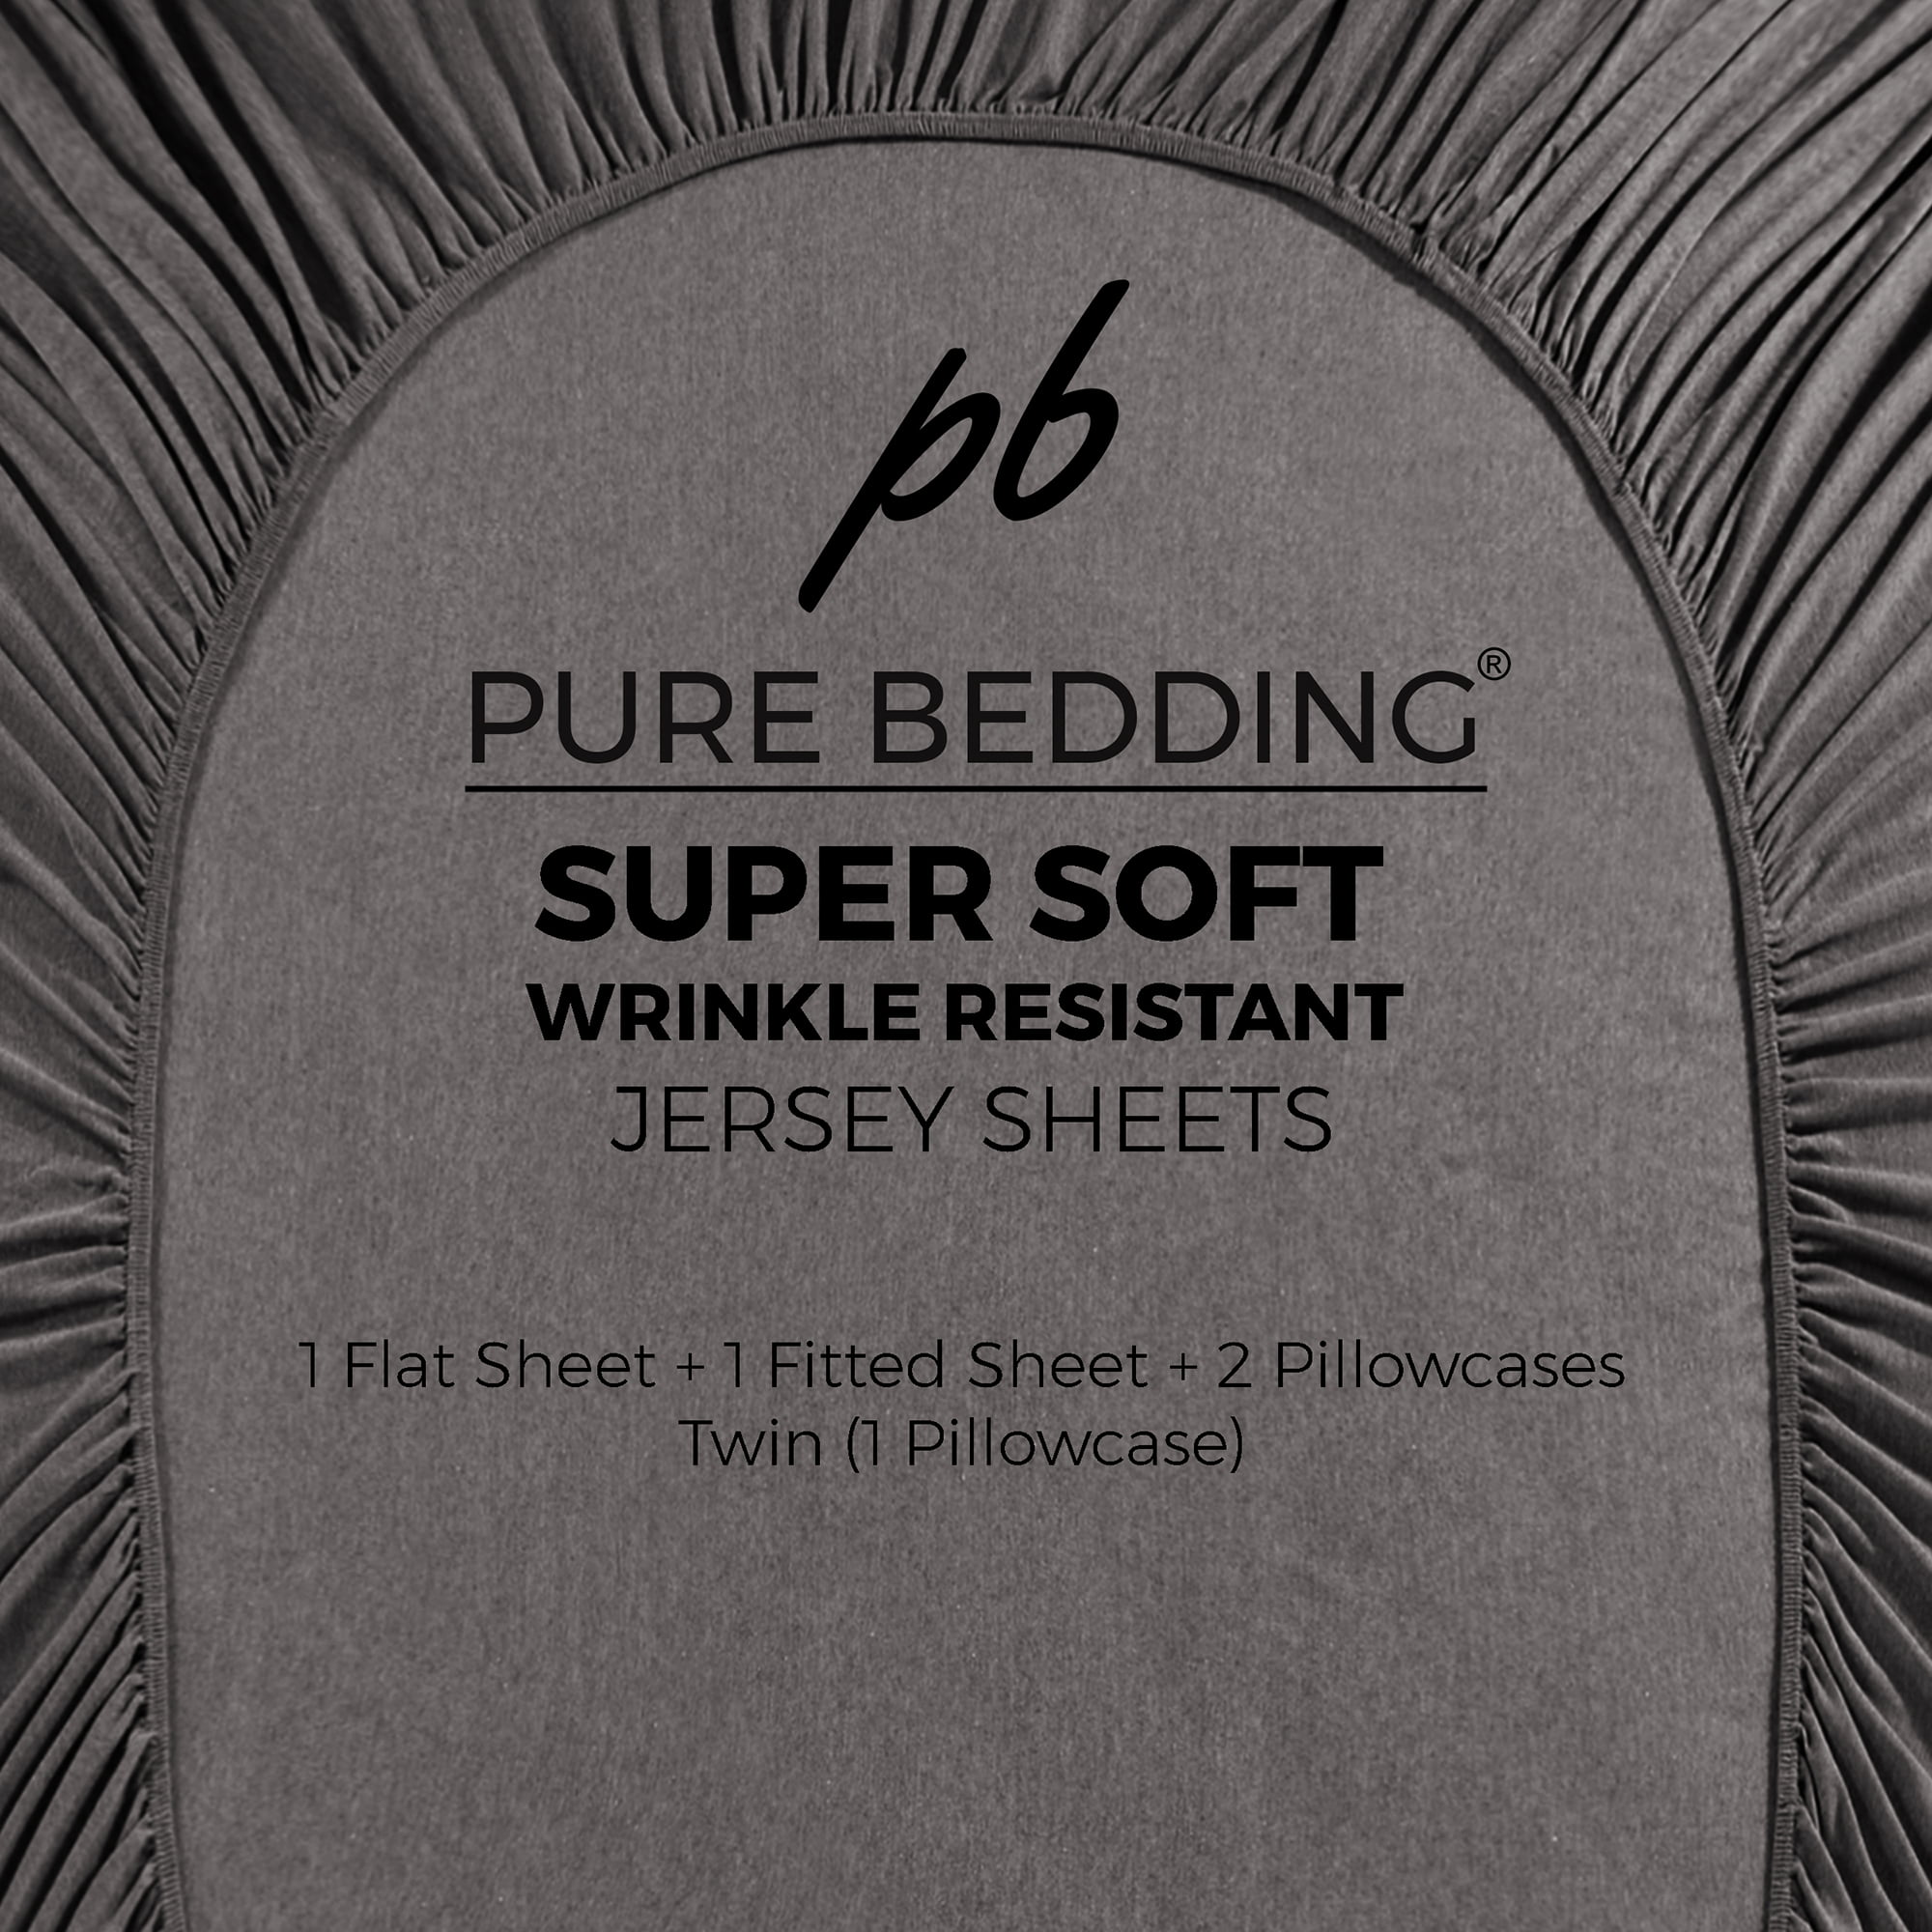 Utopia Bedding Queen Sheet Set - Jersey Knit Sheets 4 Piece – Cotton – Soft  T-Shirt Stretchy Sheets (Heather Light Grey)